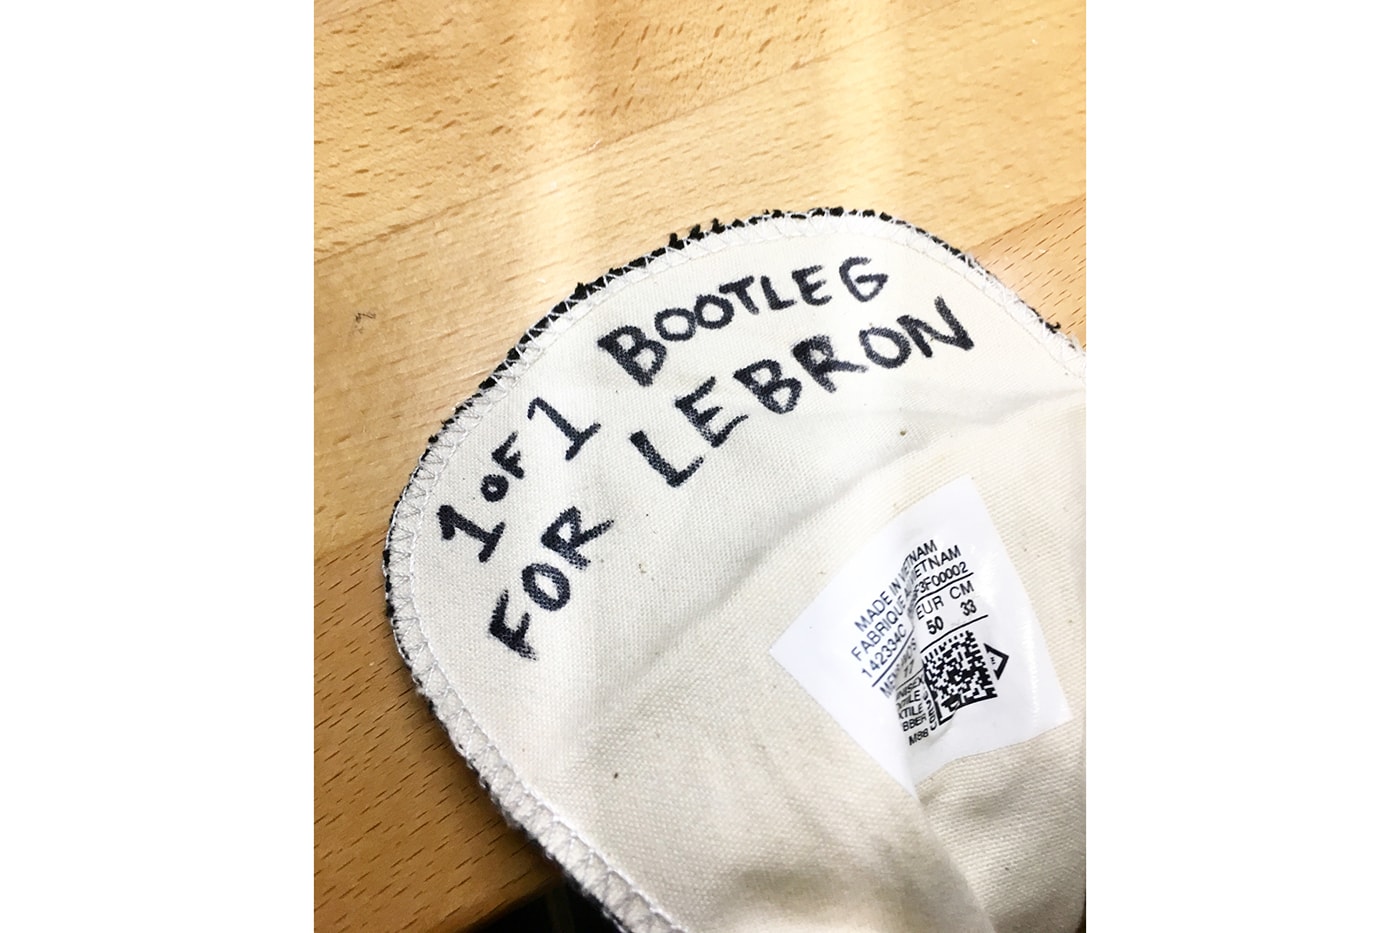 LeBron James Converse Chuck Taylor 1970 Bootleg Nike Swoosh Chinatown Market sneakers footwear basketball